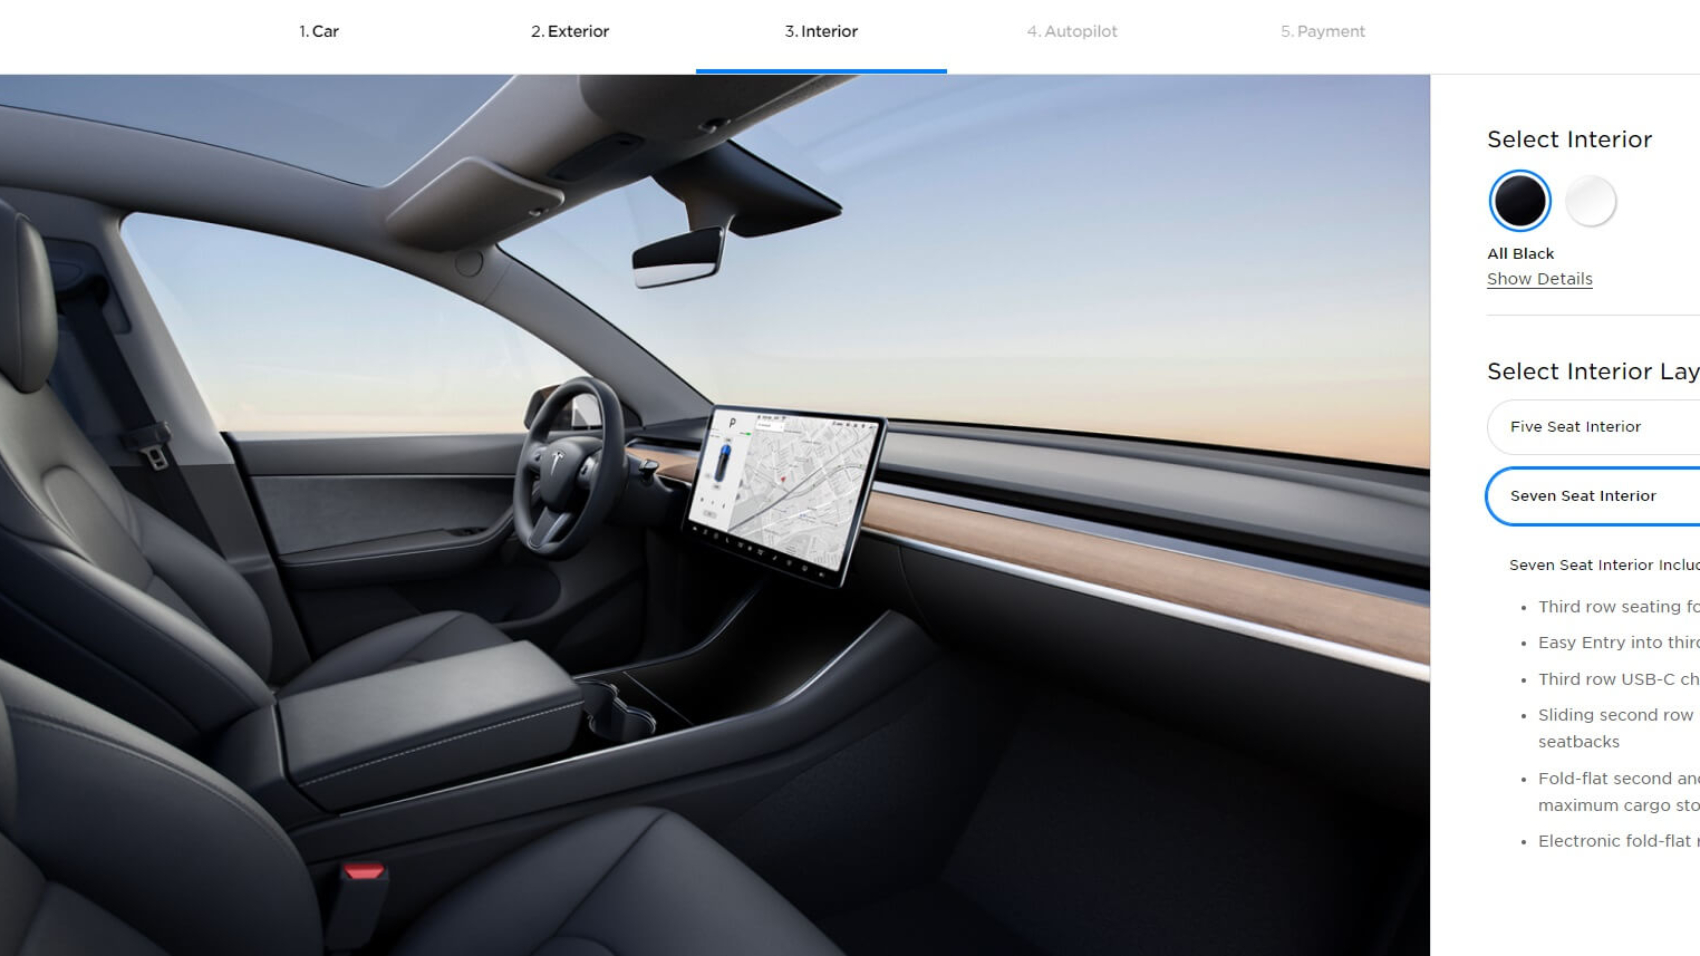 2021 Tesla Model Y seven seat option